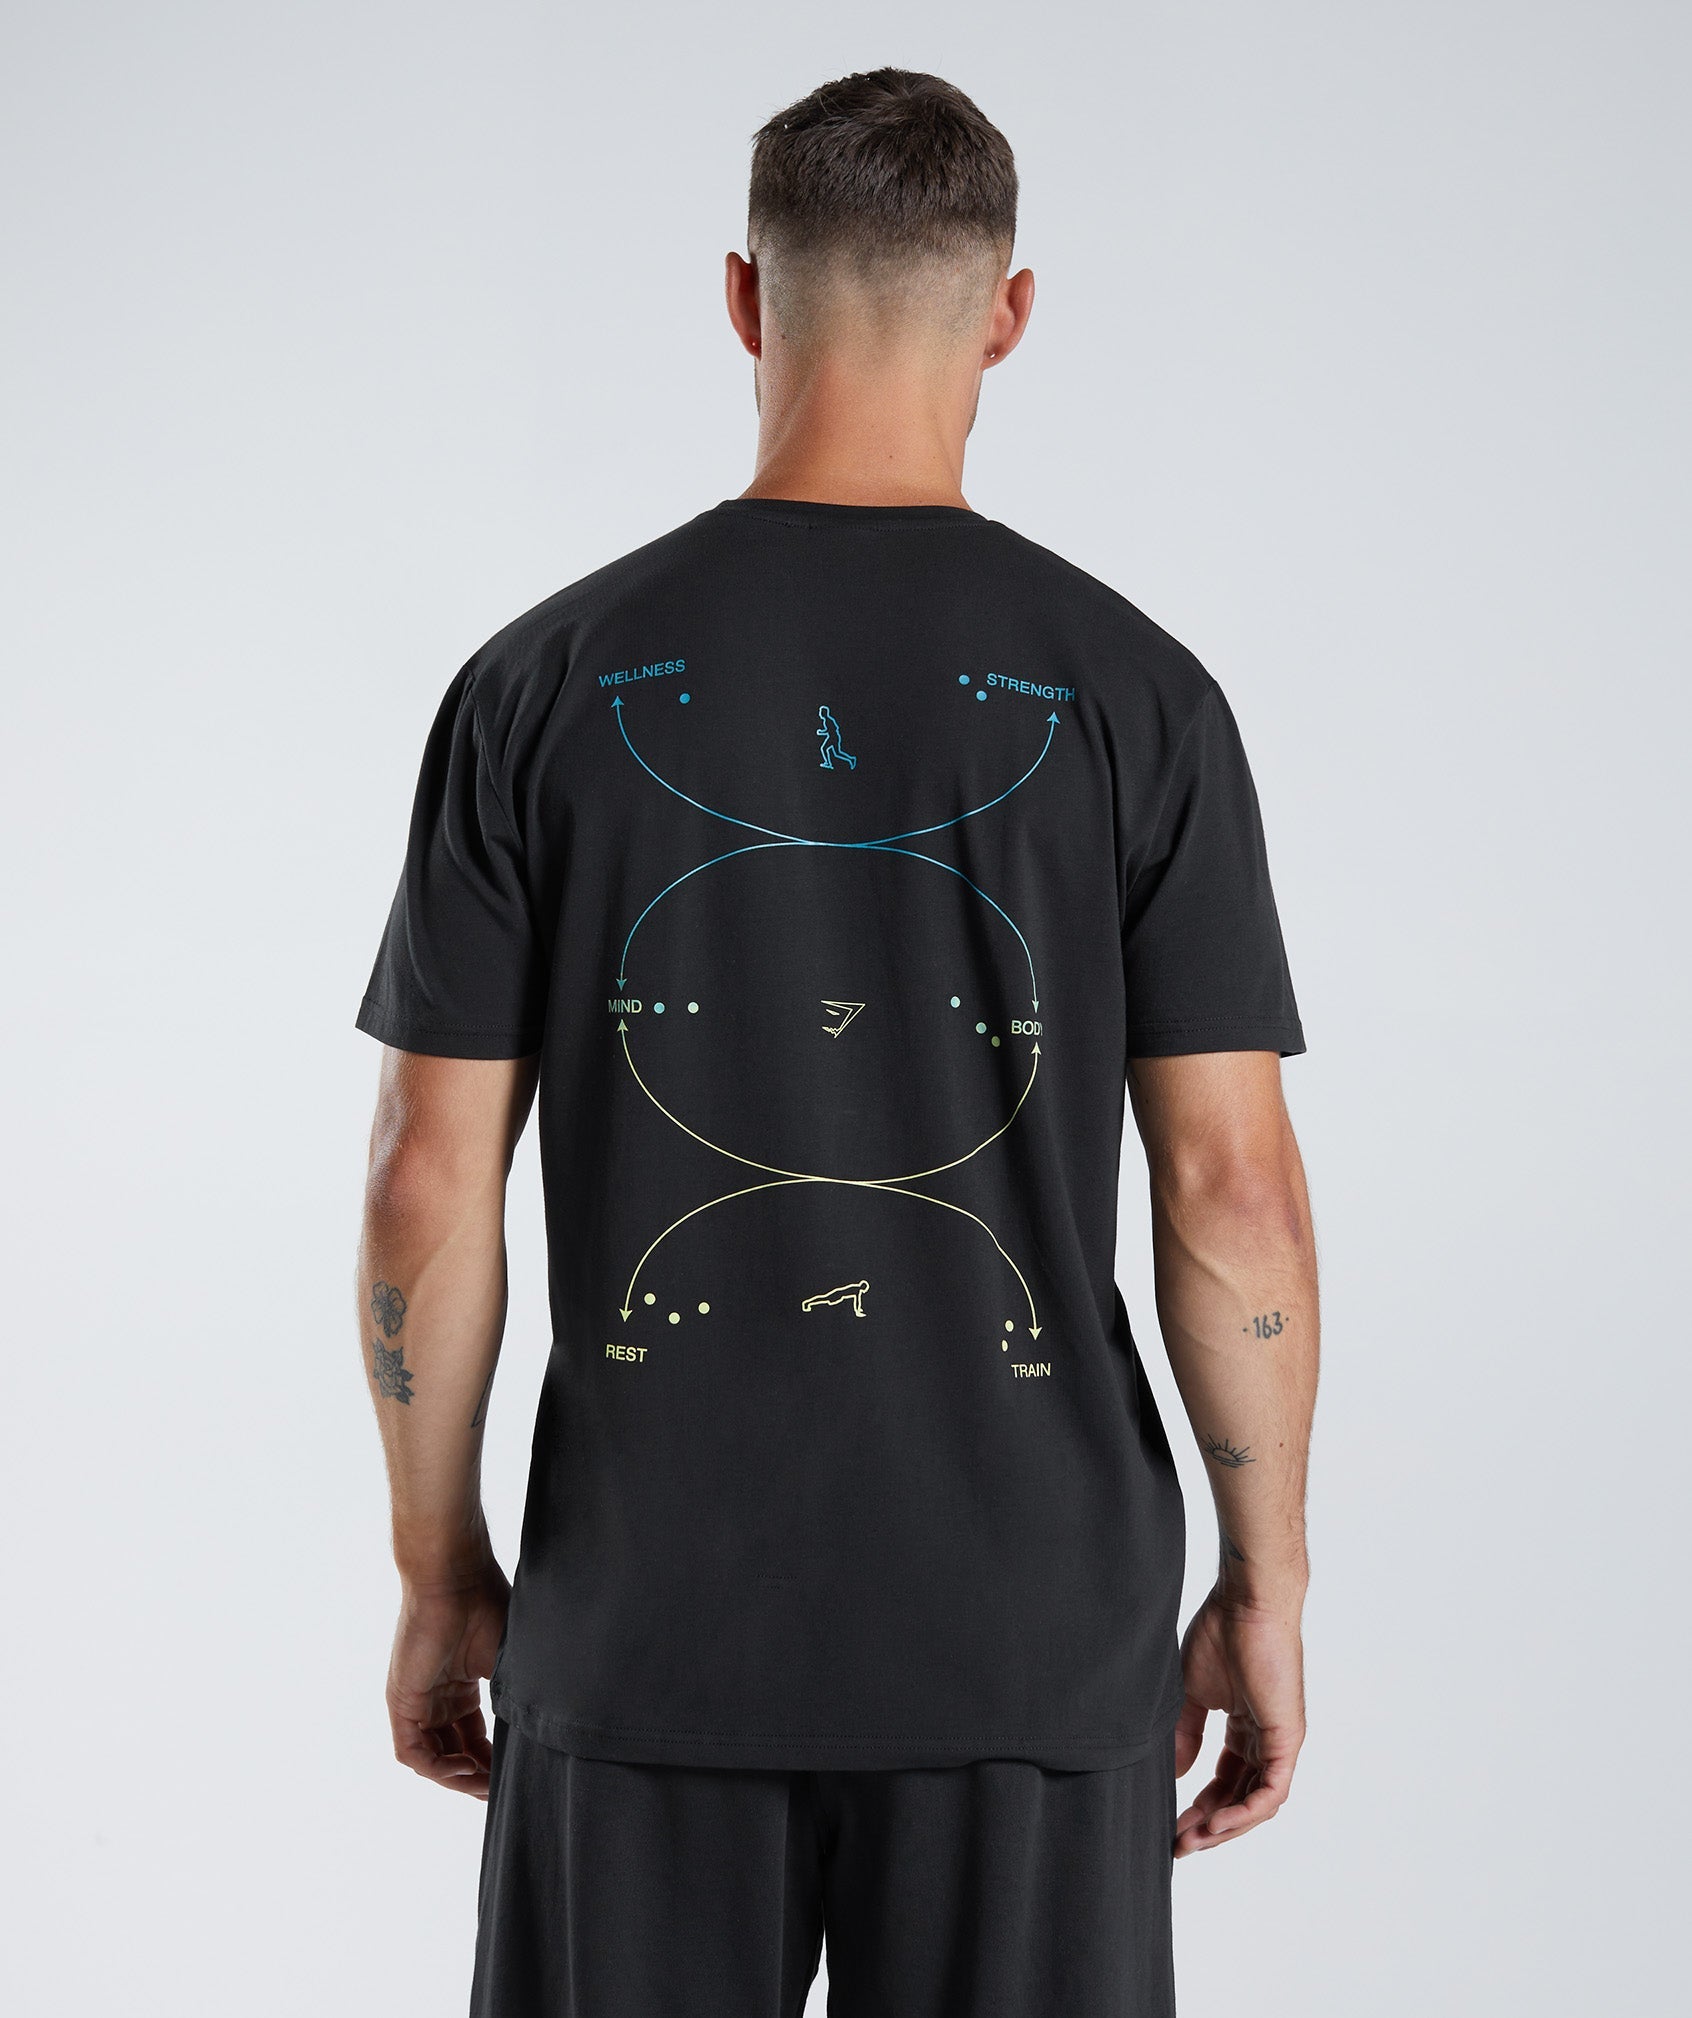 Hybrid Wellness T-Shirt in Black - view 2